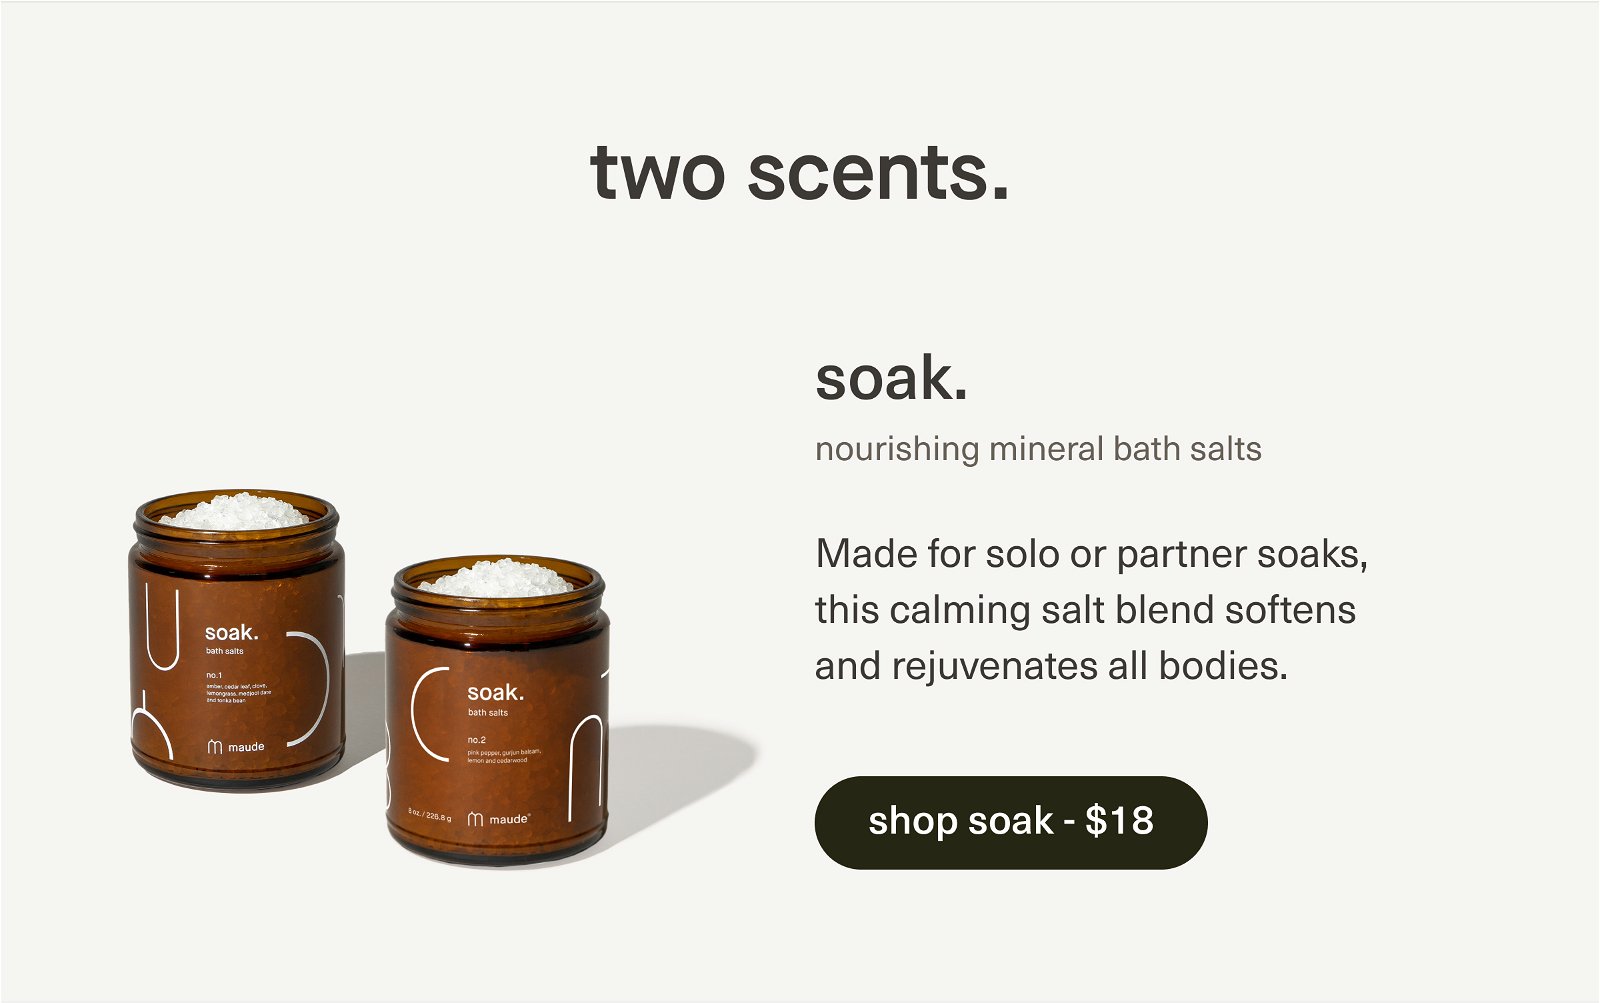 two scents. soak.